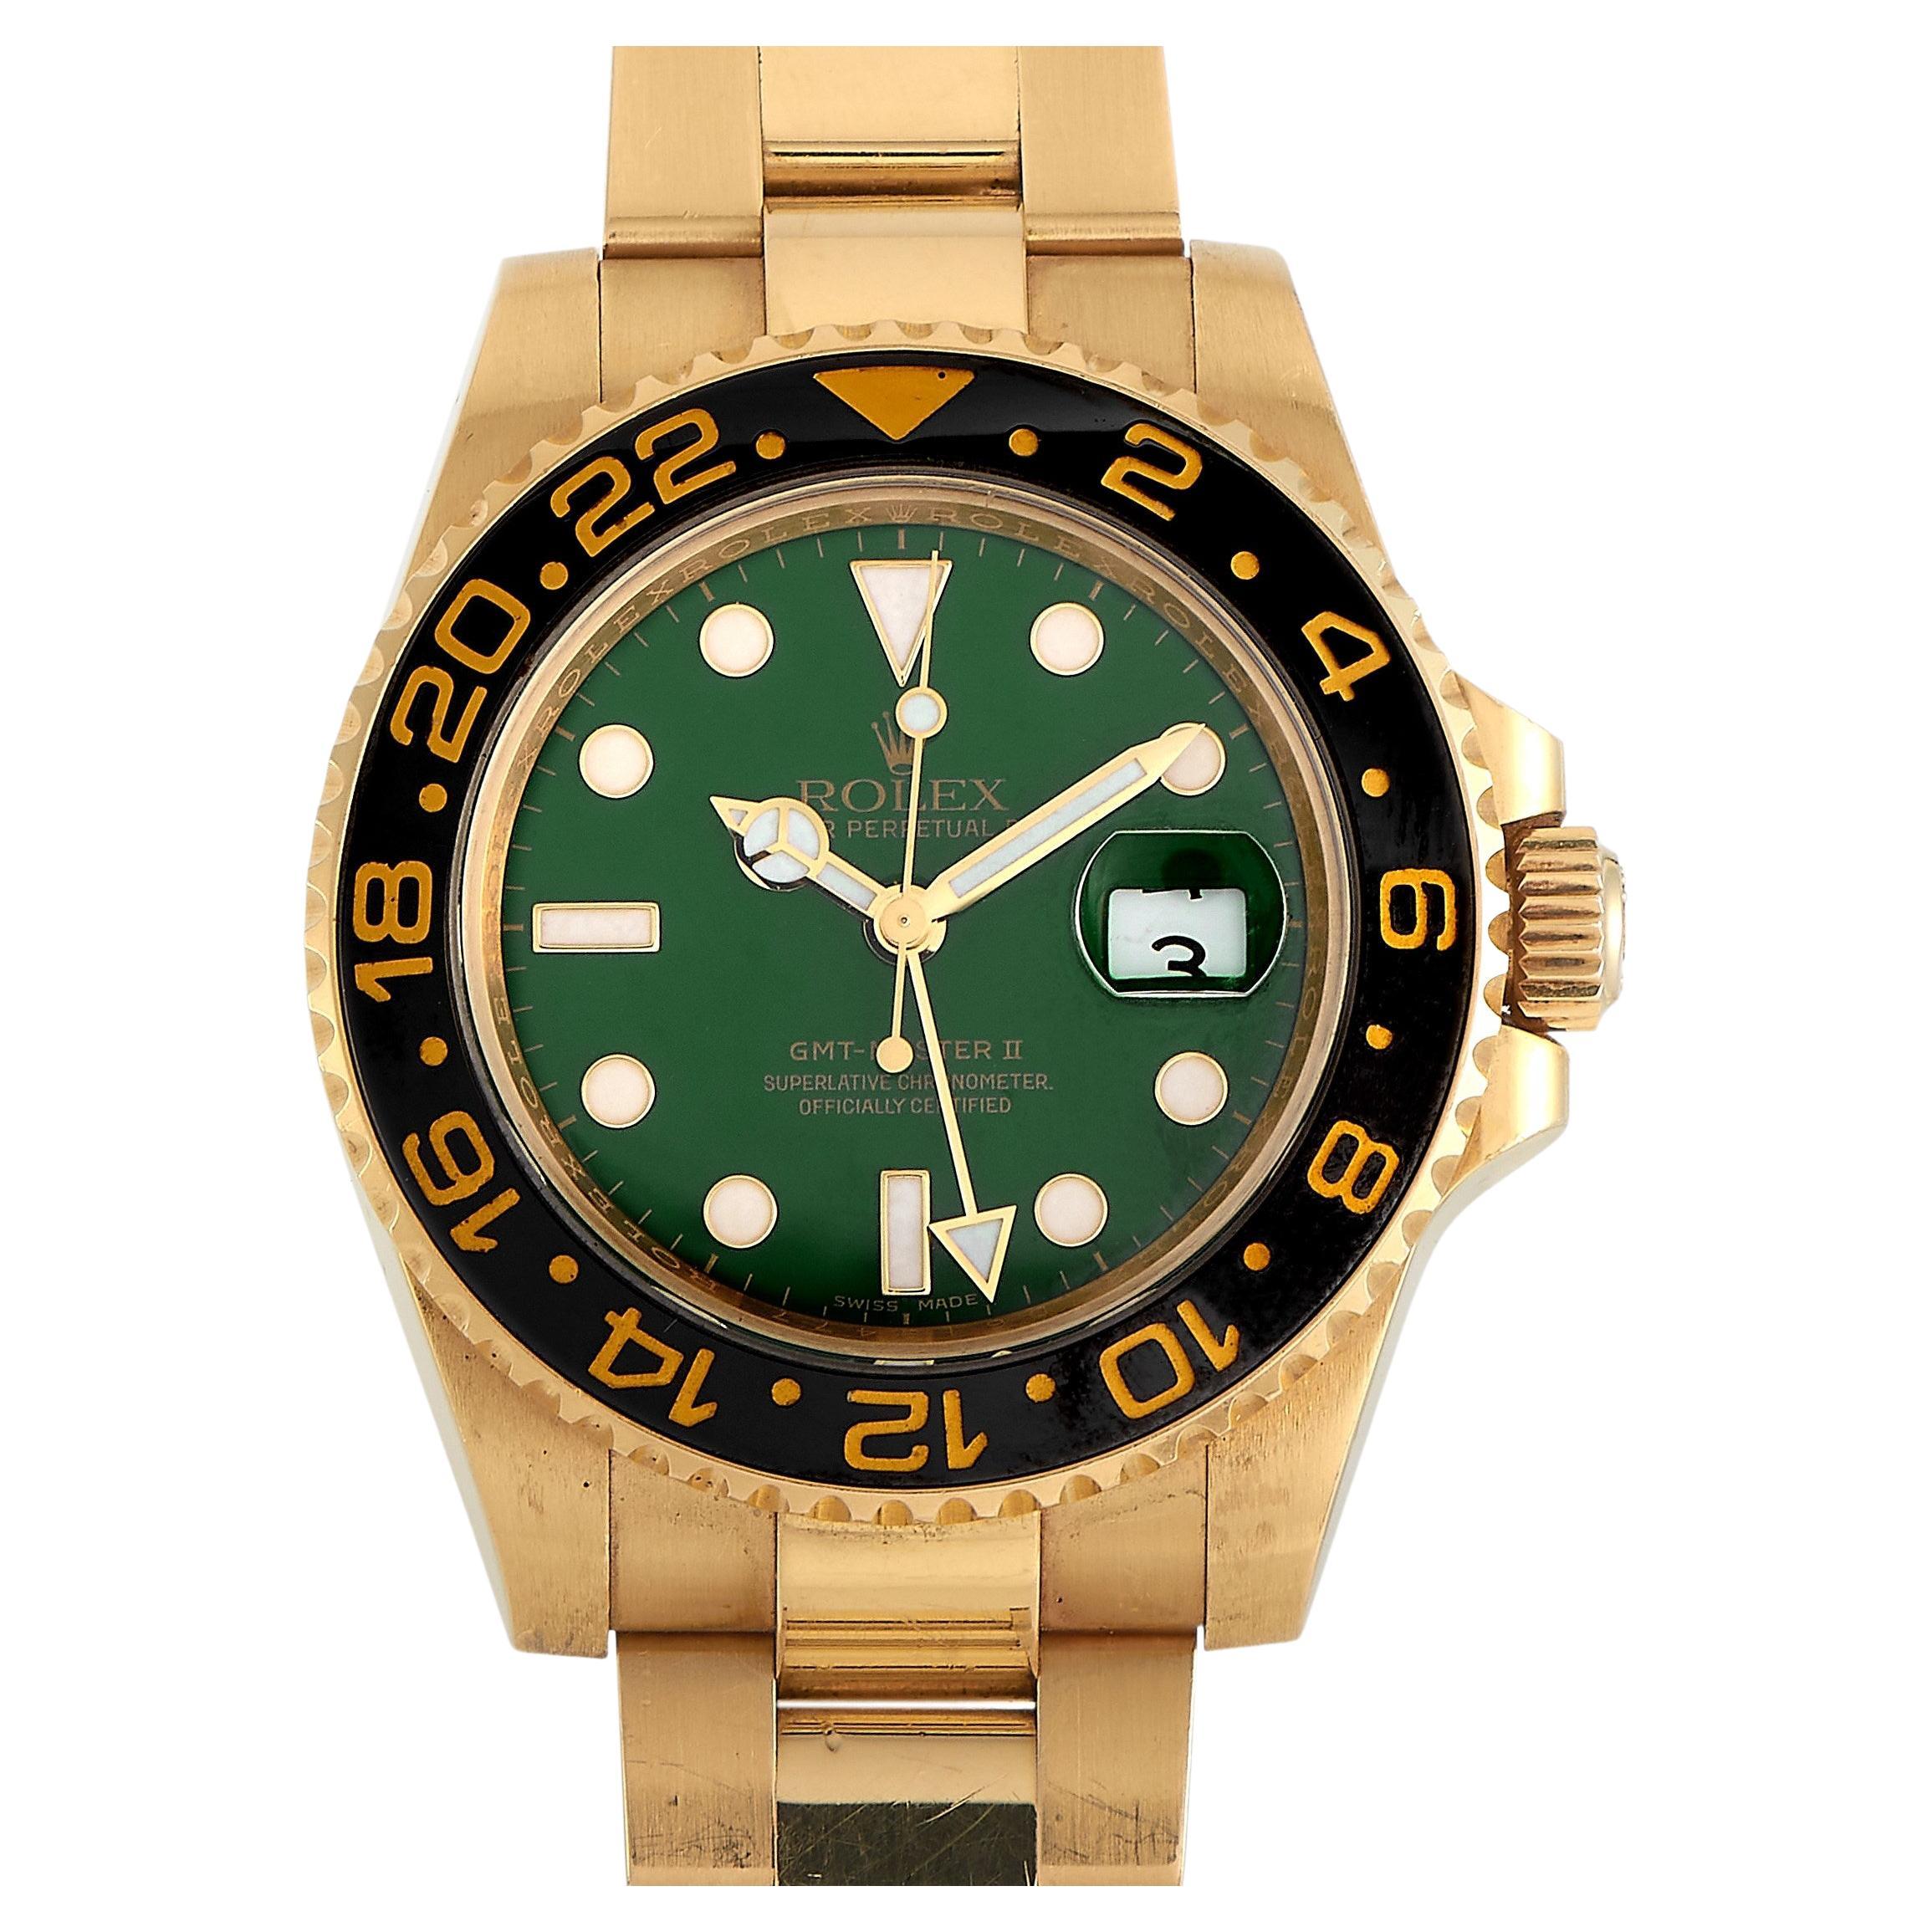 Rolex GMT-Master II Yellow Gold Green Dial Watch 116718LN